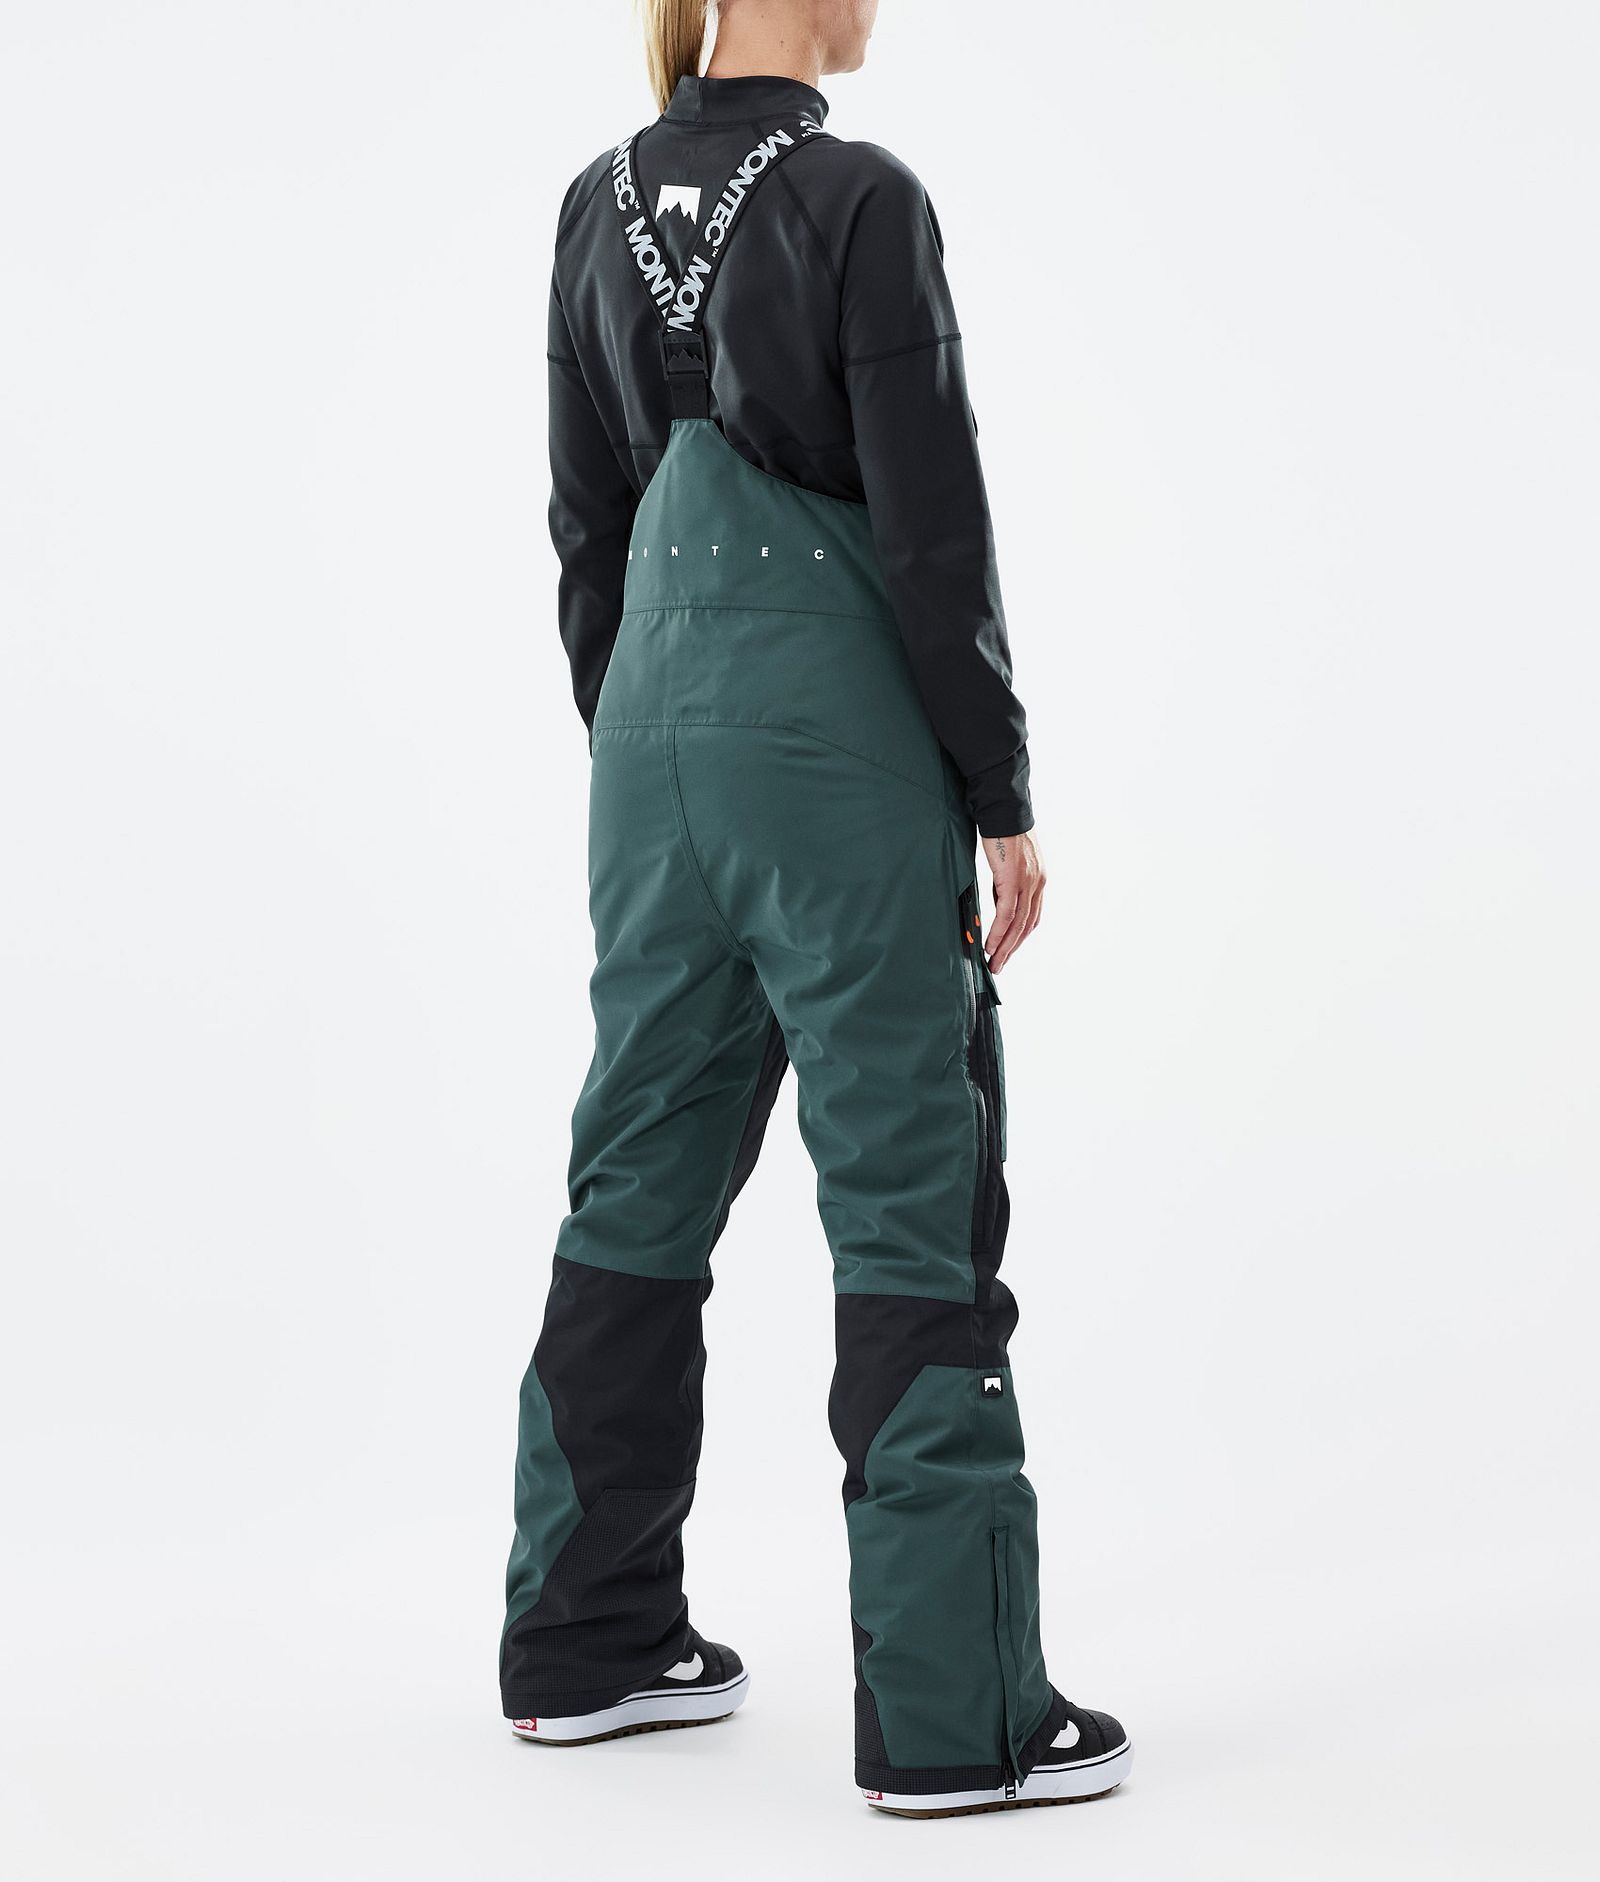 Fawk W Pantalon de Snowboard Femme Dark Atlantic/Black, Image 4 sur 7